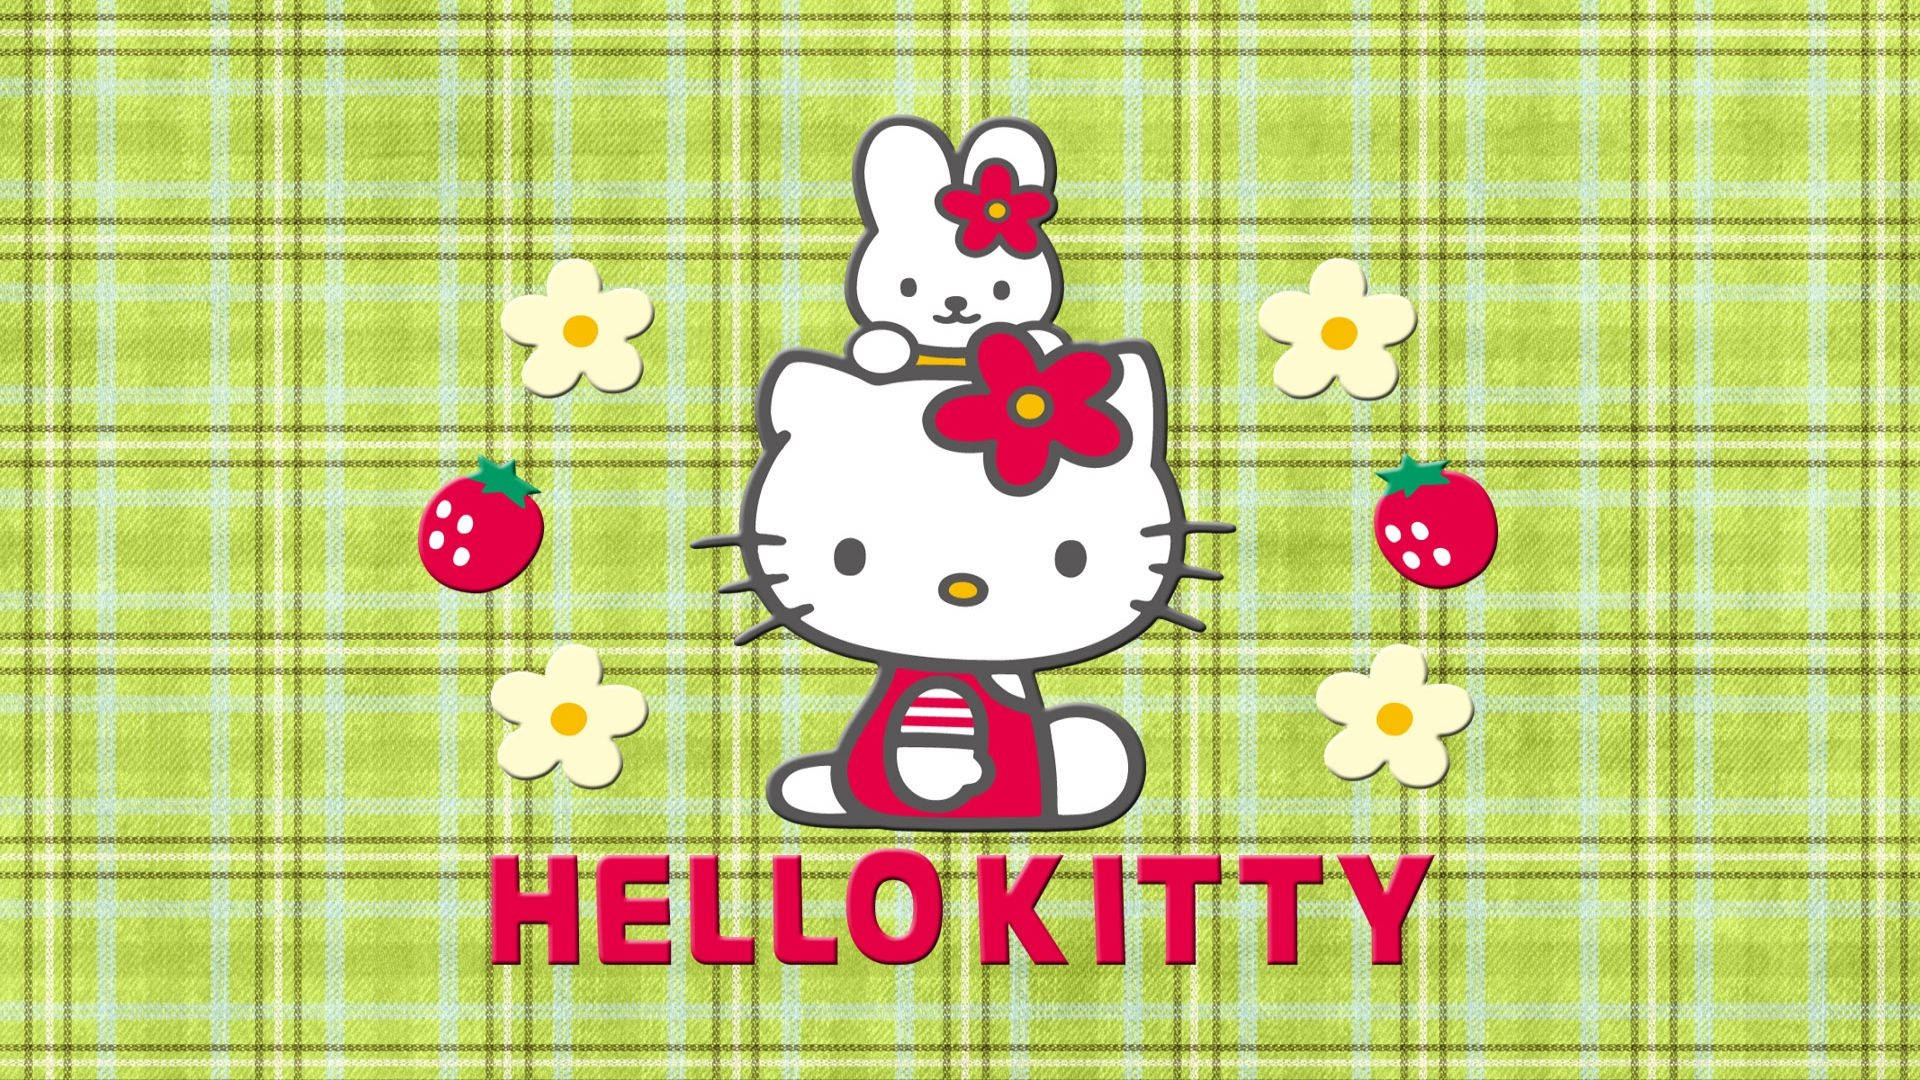 Kathy And Hello Kitty Aesthetic Wallpaper